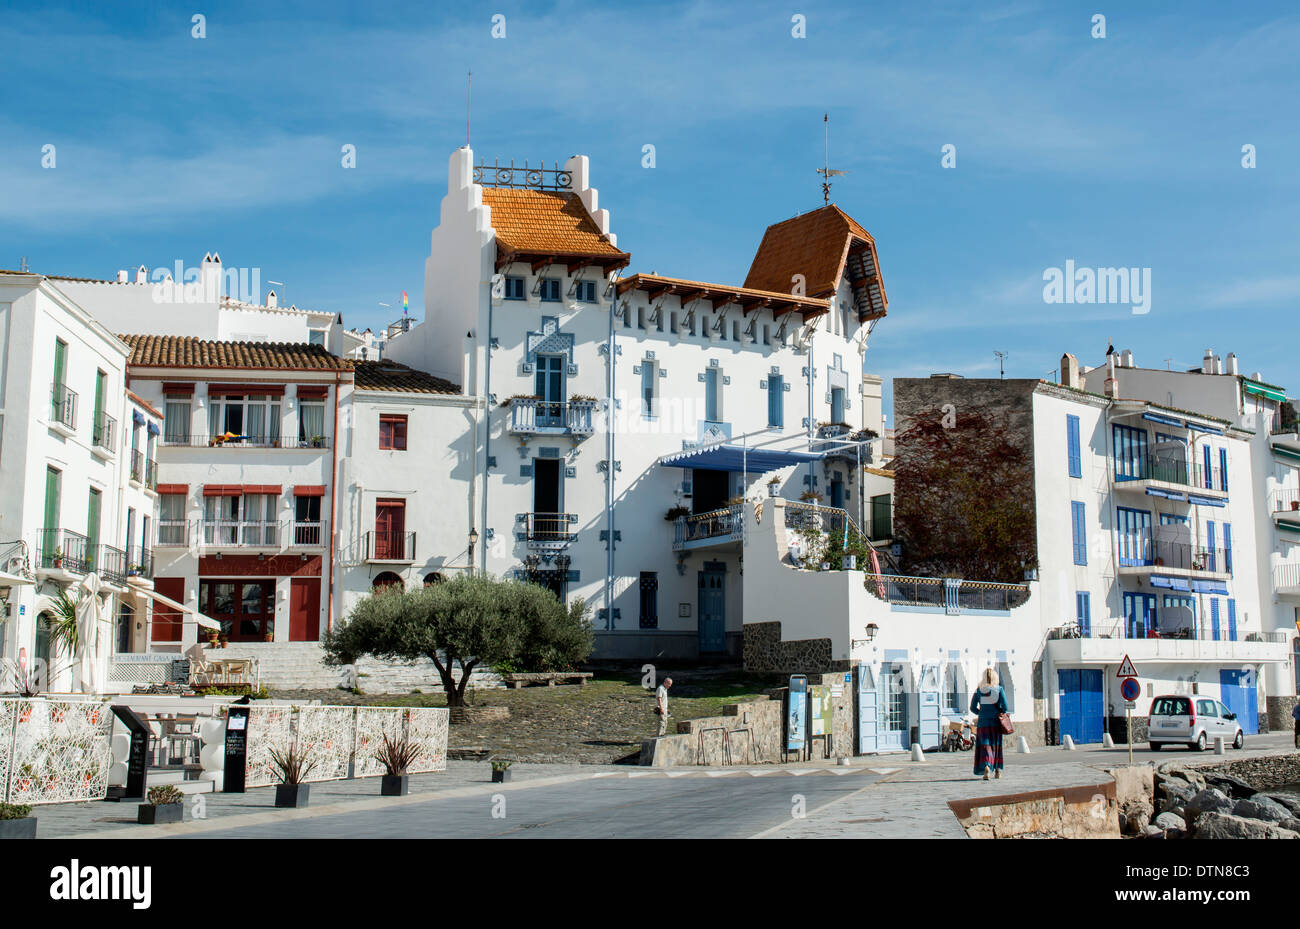 The tall Casa Serinyana or Casa blau in Cadaques, Cap de Creus peninsula, Costa Brava, Catalonia, Spain Stock Photo